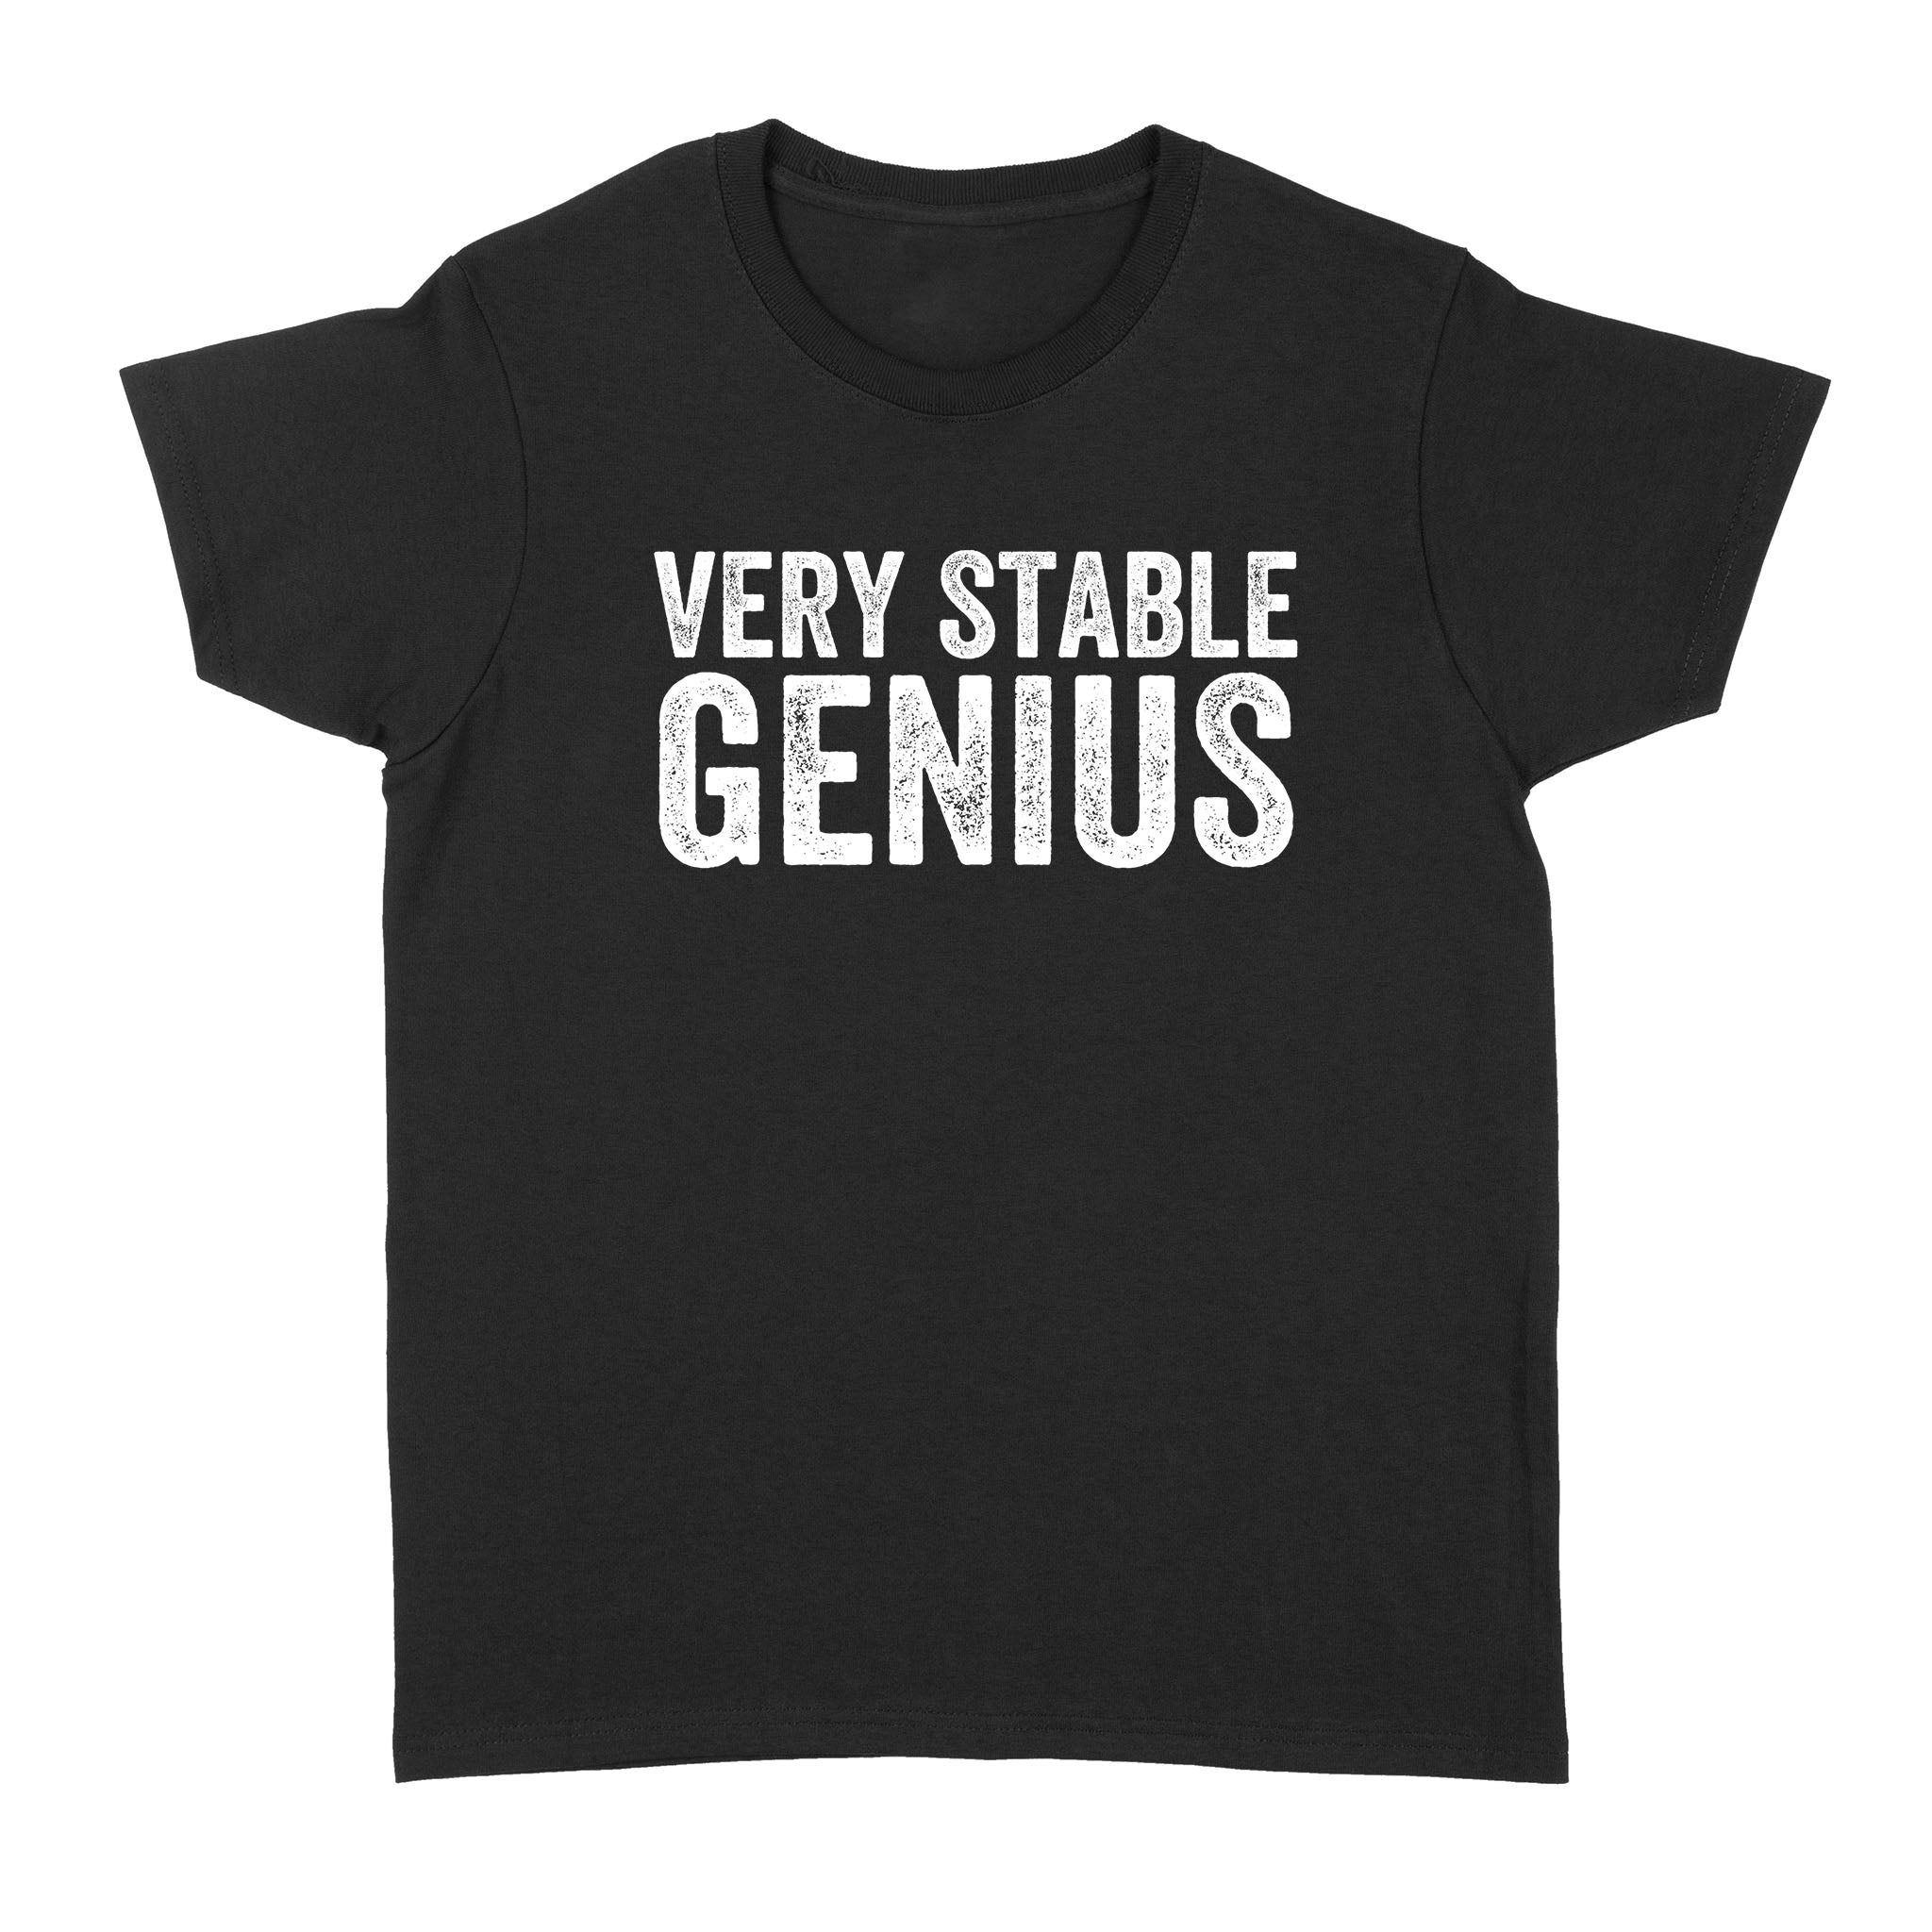 Very Stable Genius - Standard Women's T-shirt